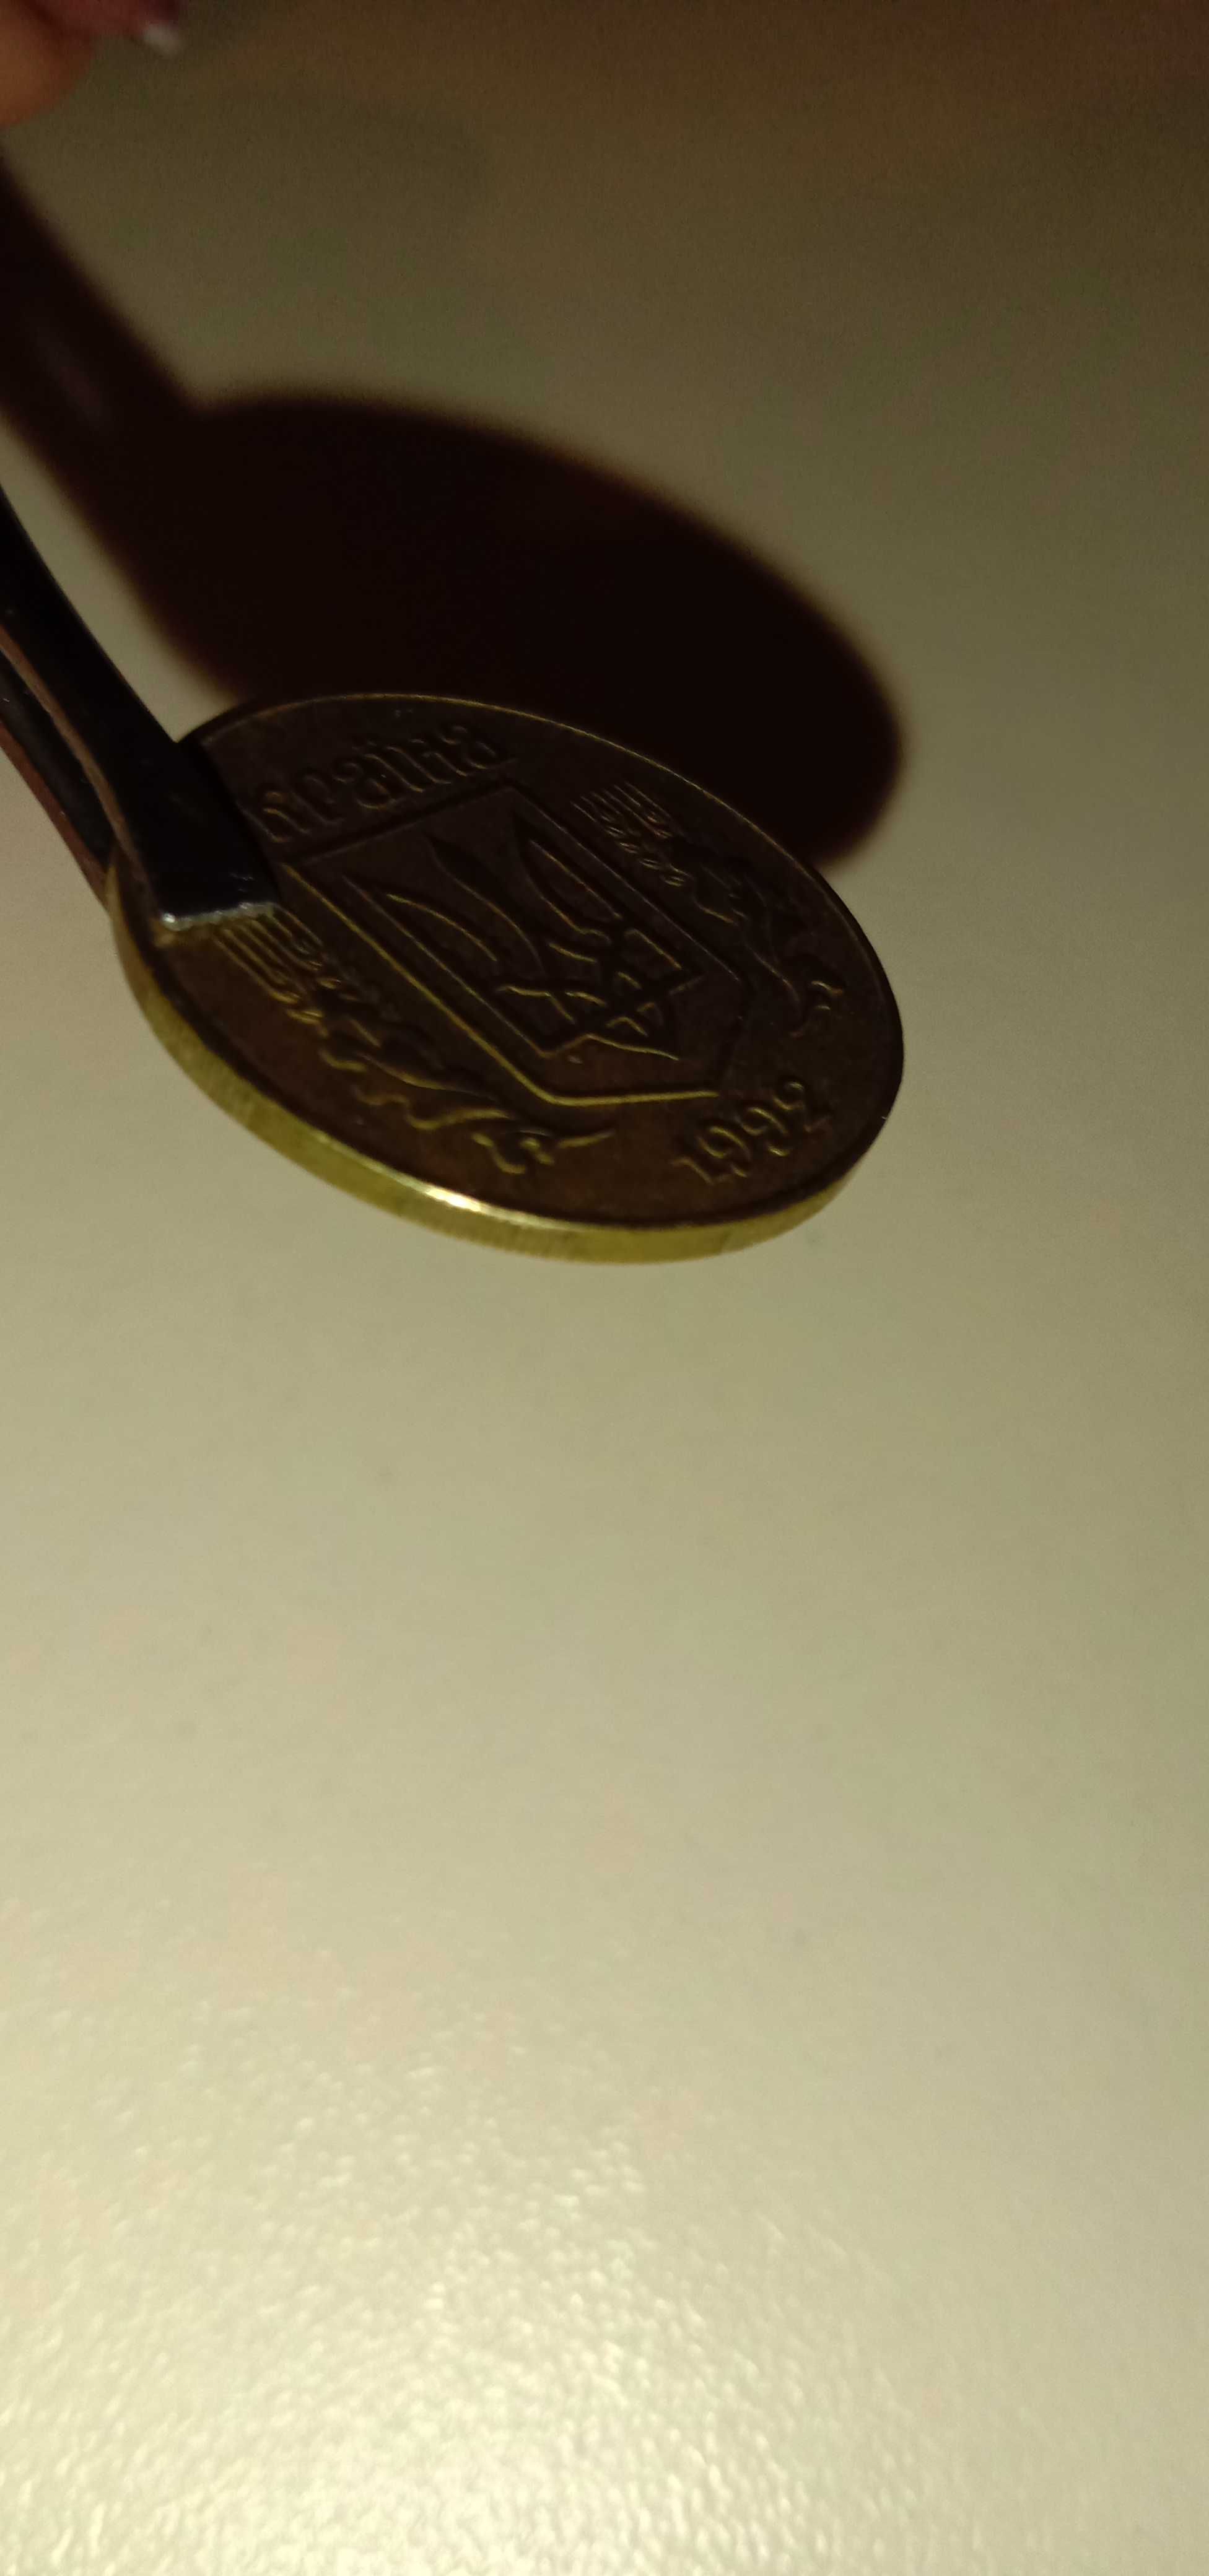 Продам редкую монету 25 копеек 1992 года